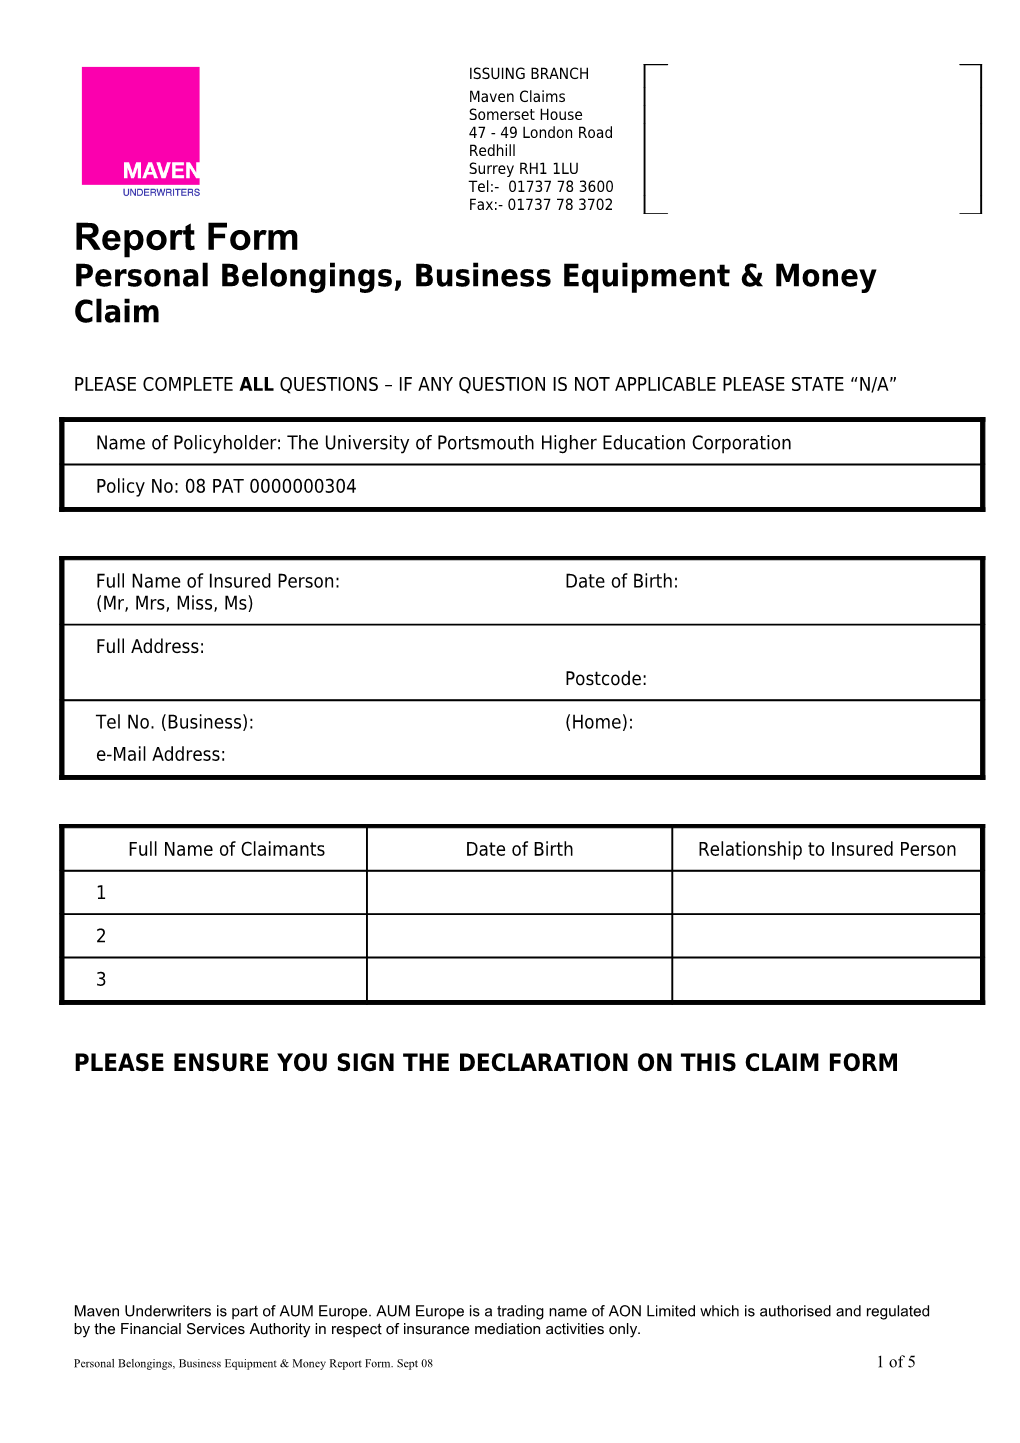 Personal Belongings, Business Equipment & Money Claim